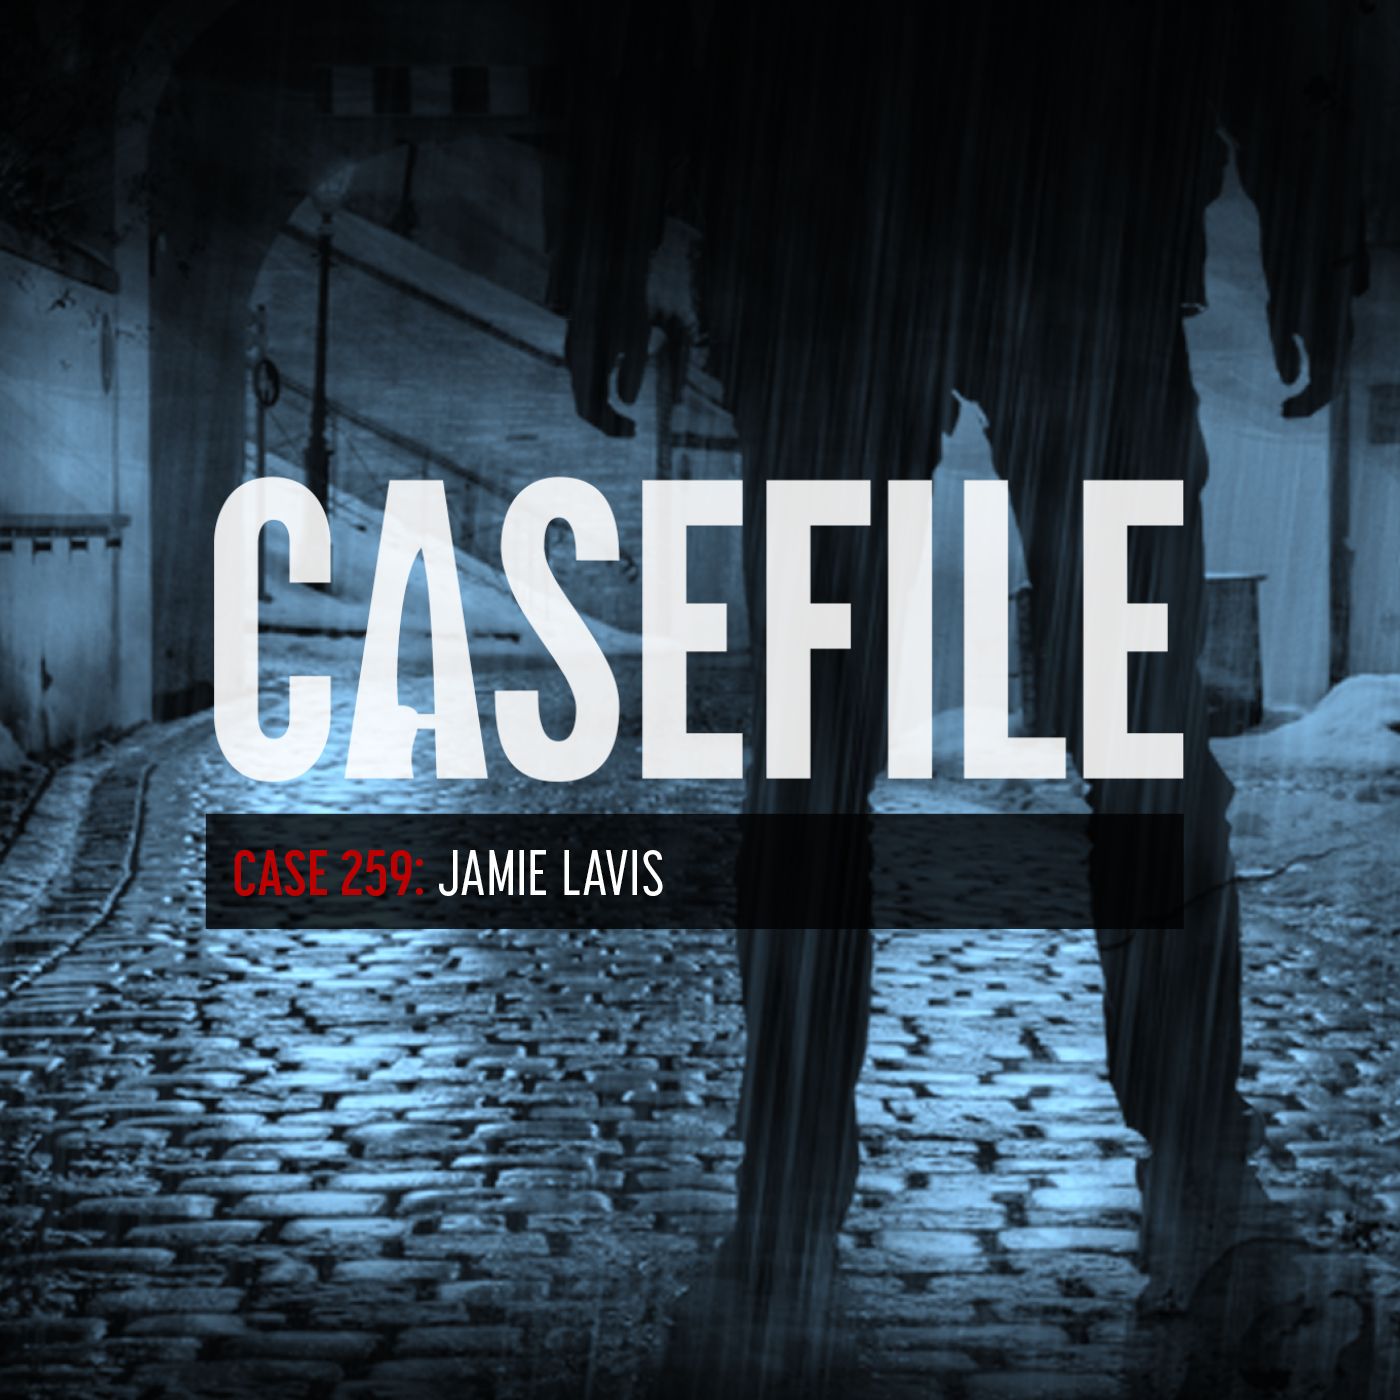 Case 259: Jamie Lavis